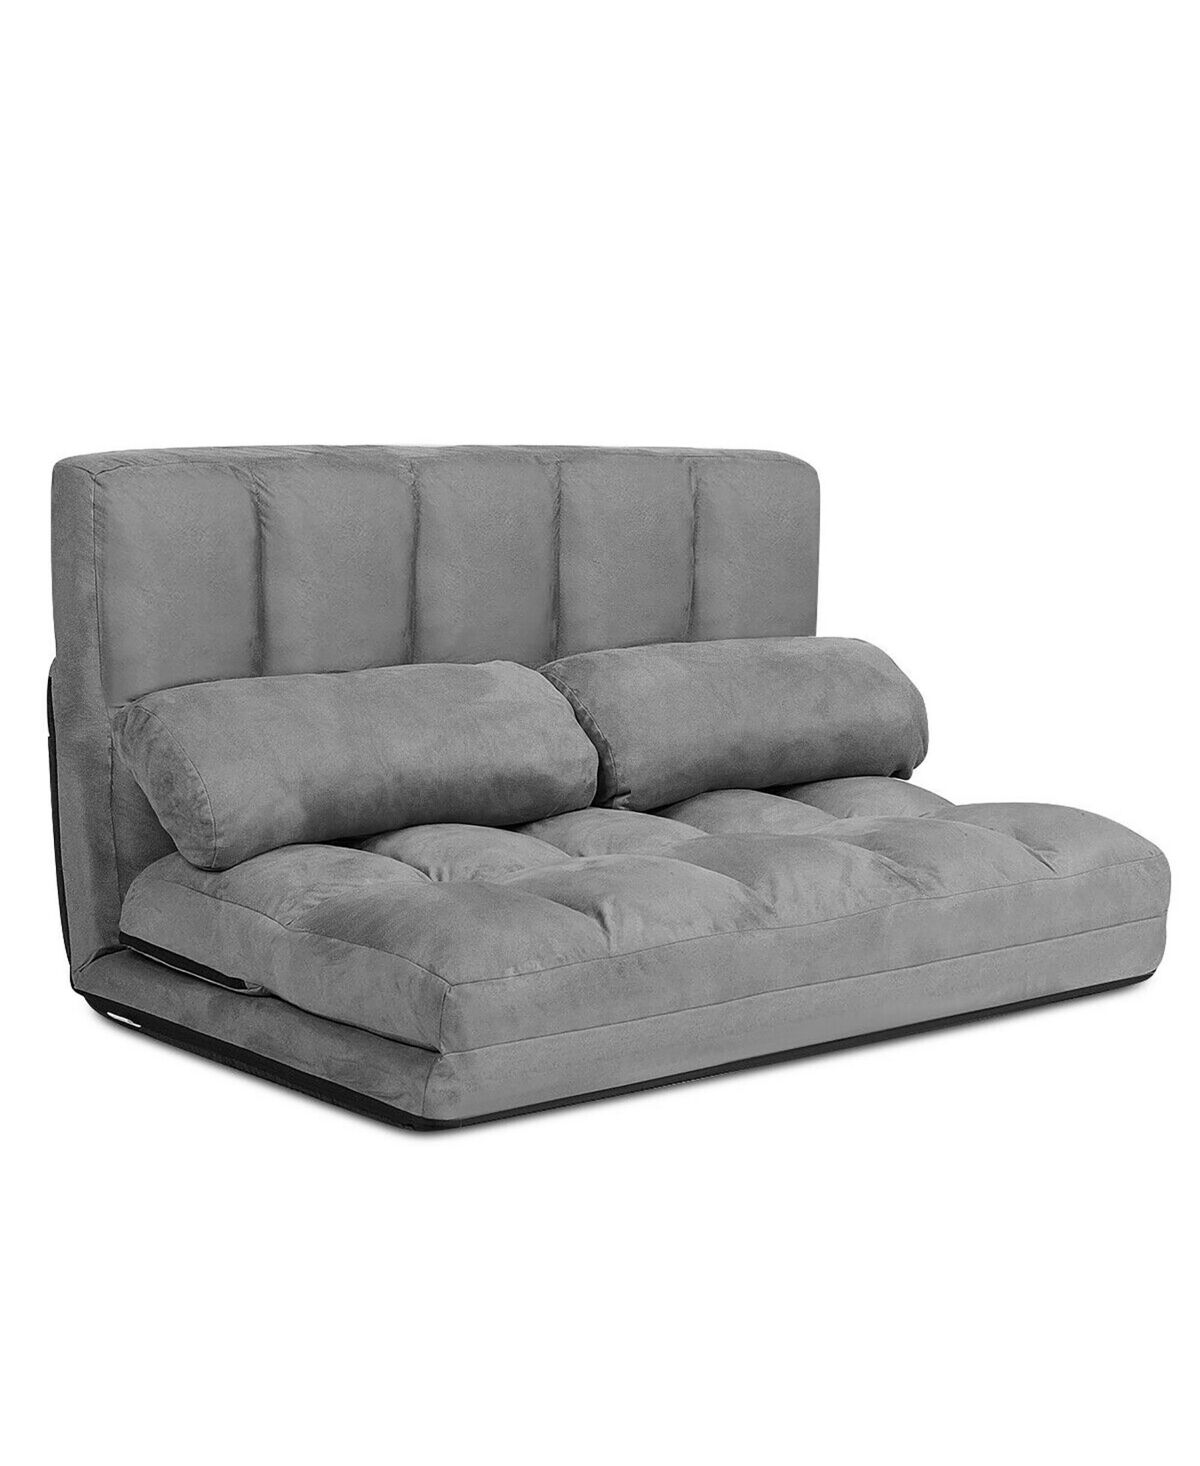 Costway Foldable 6-Position Adjustable Lounge Sofa - Grey